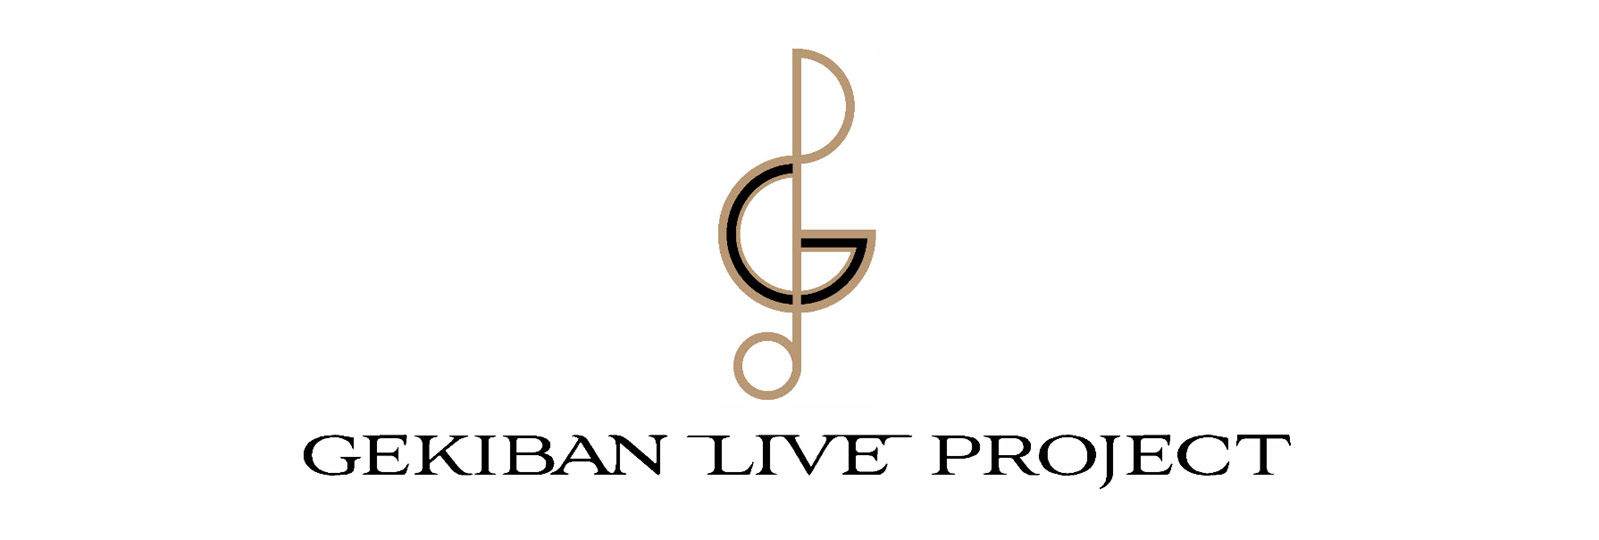 New-Project-GEKIBAN-LIVE-PROJECT-Logo